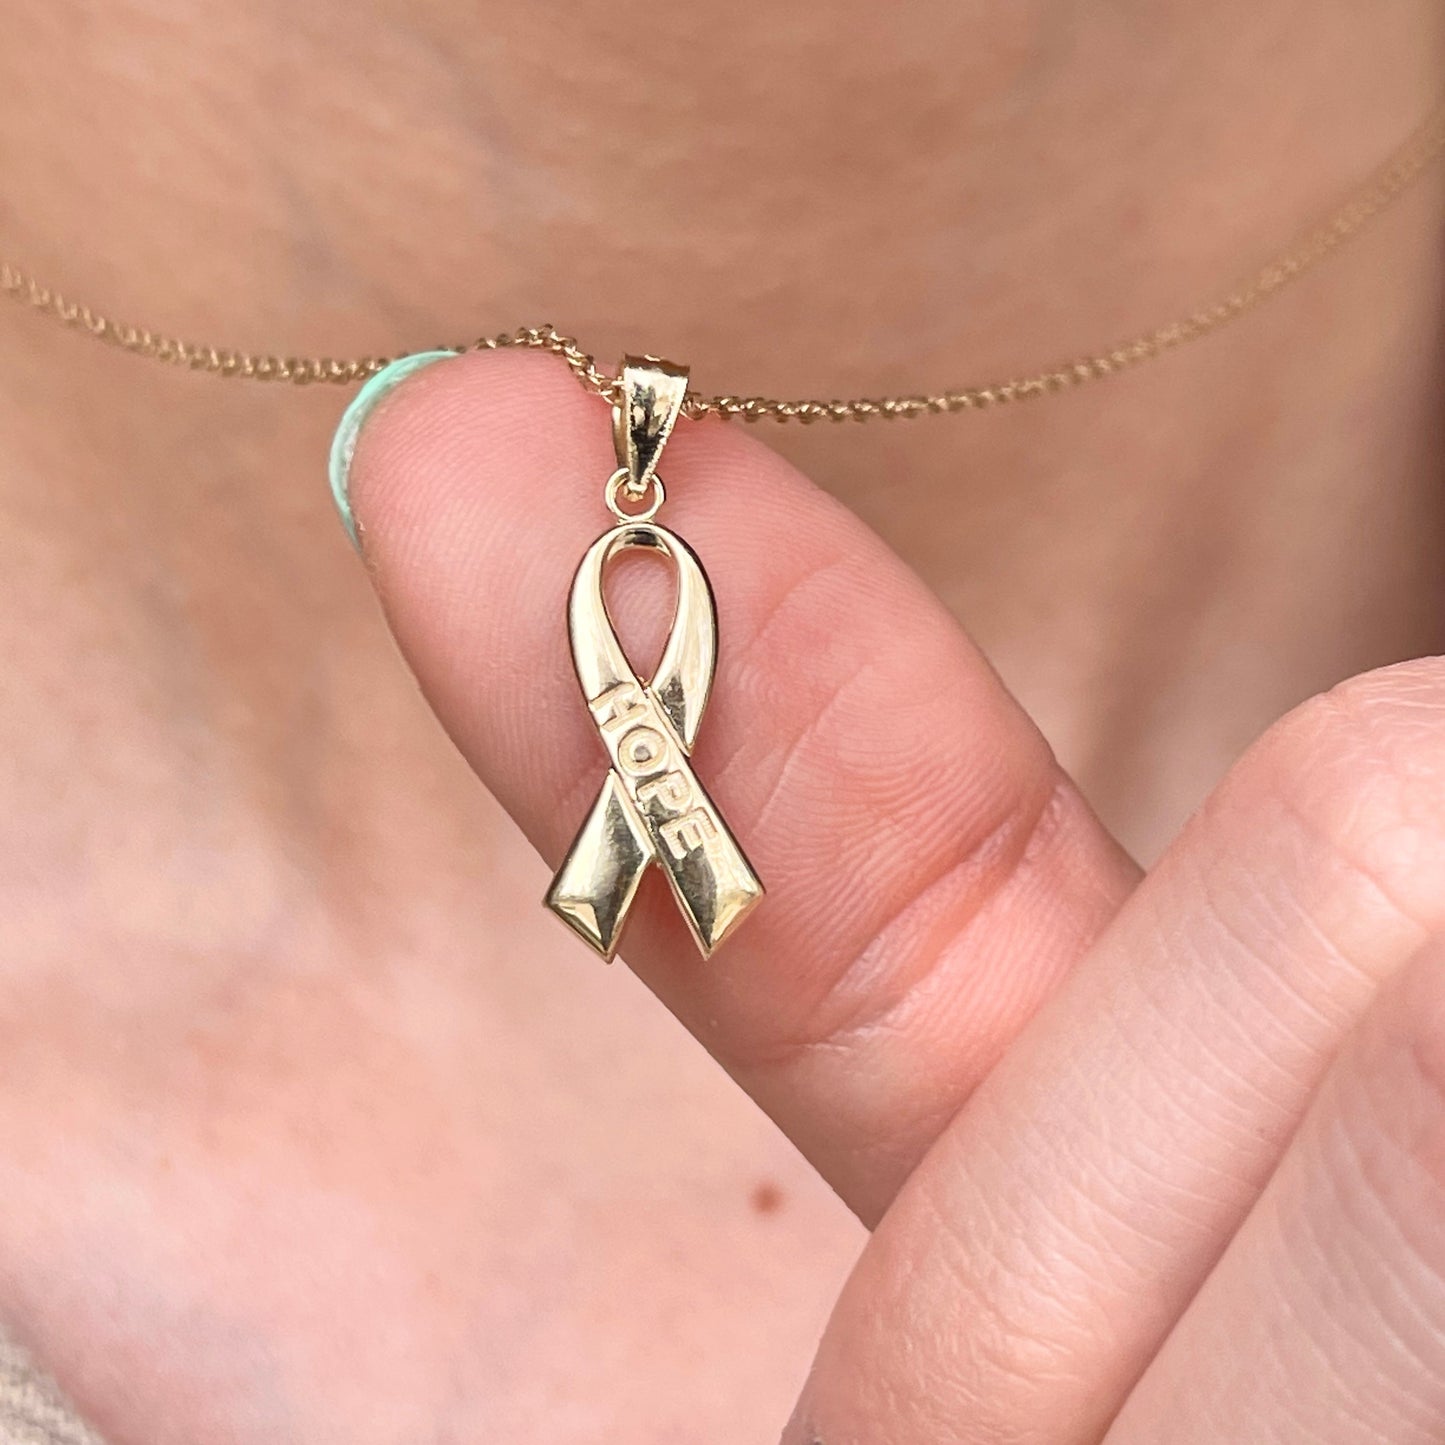 10KT Yellow Gold Cancer Awareness Hope Ribbon Pendant